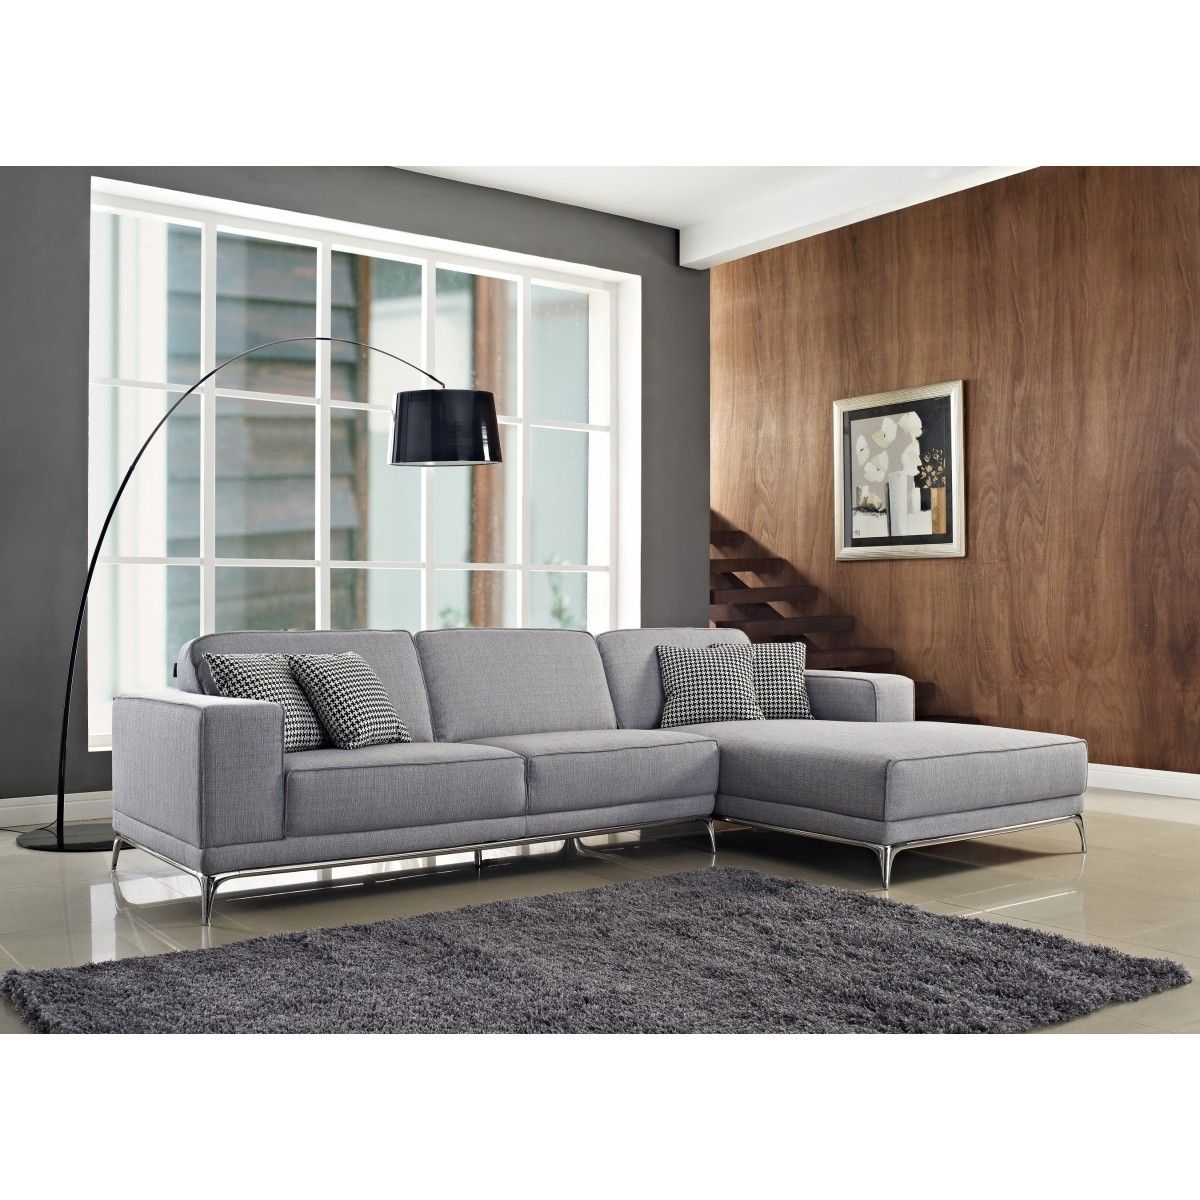 Agata Sectional Sofa | Light Grey | Sectional Sofas Cr Agata For Light Grey Sectional Sofas (View 7 of 10)